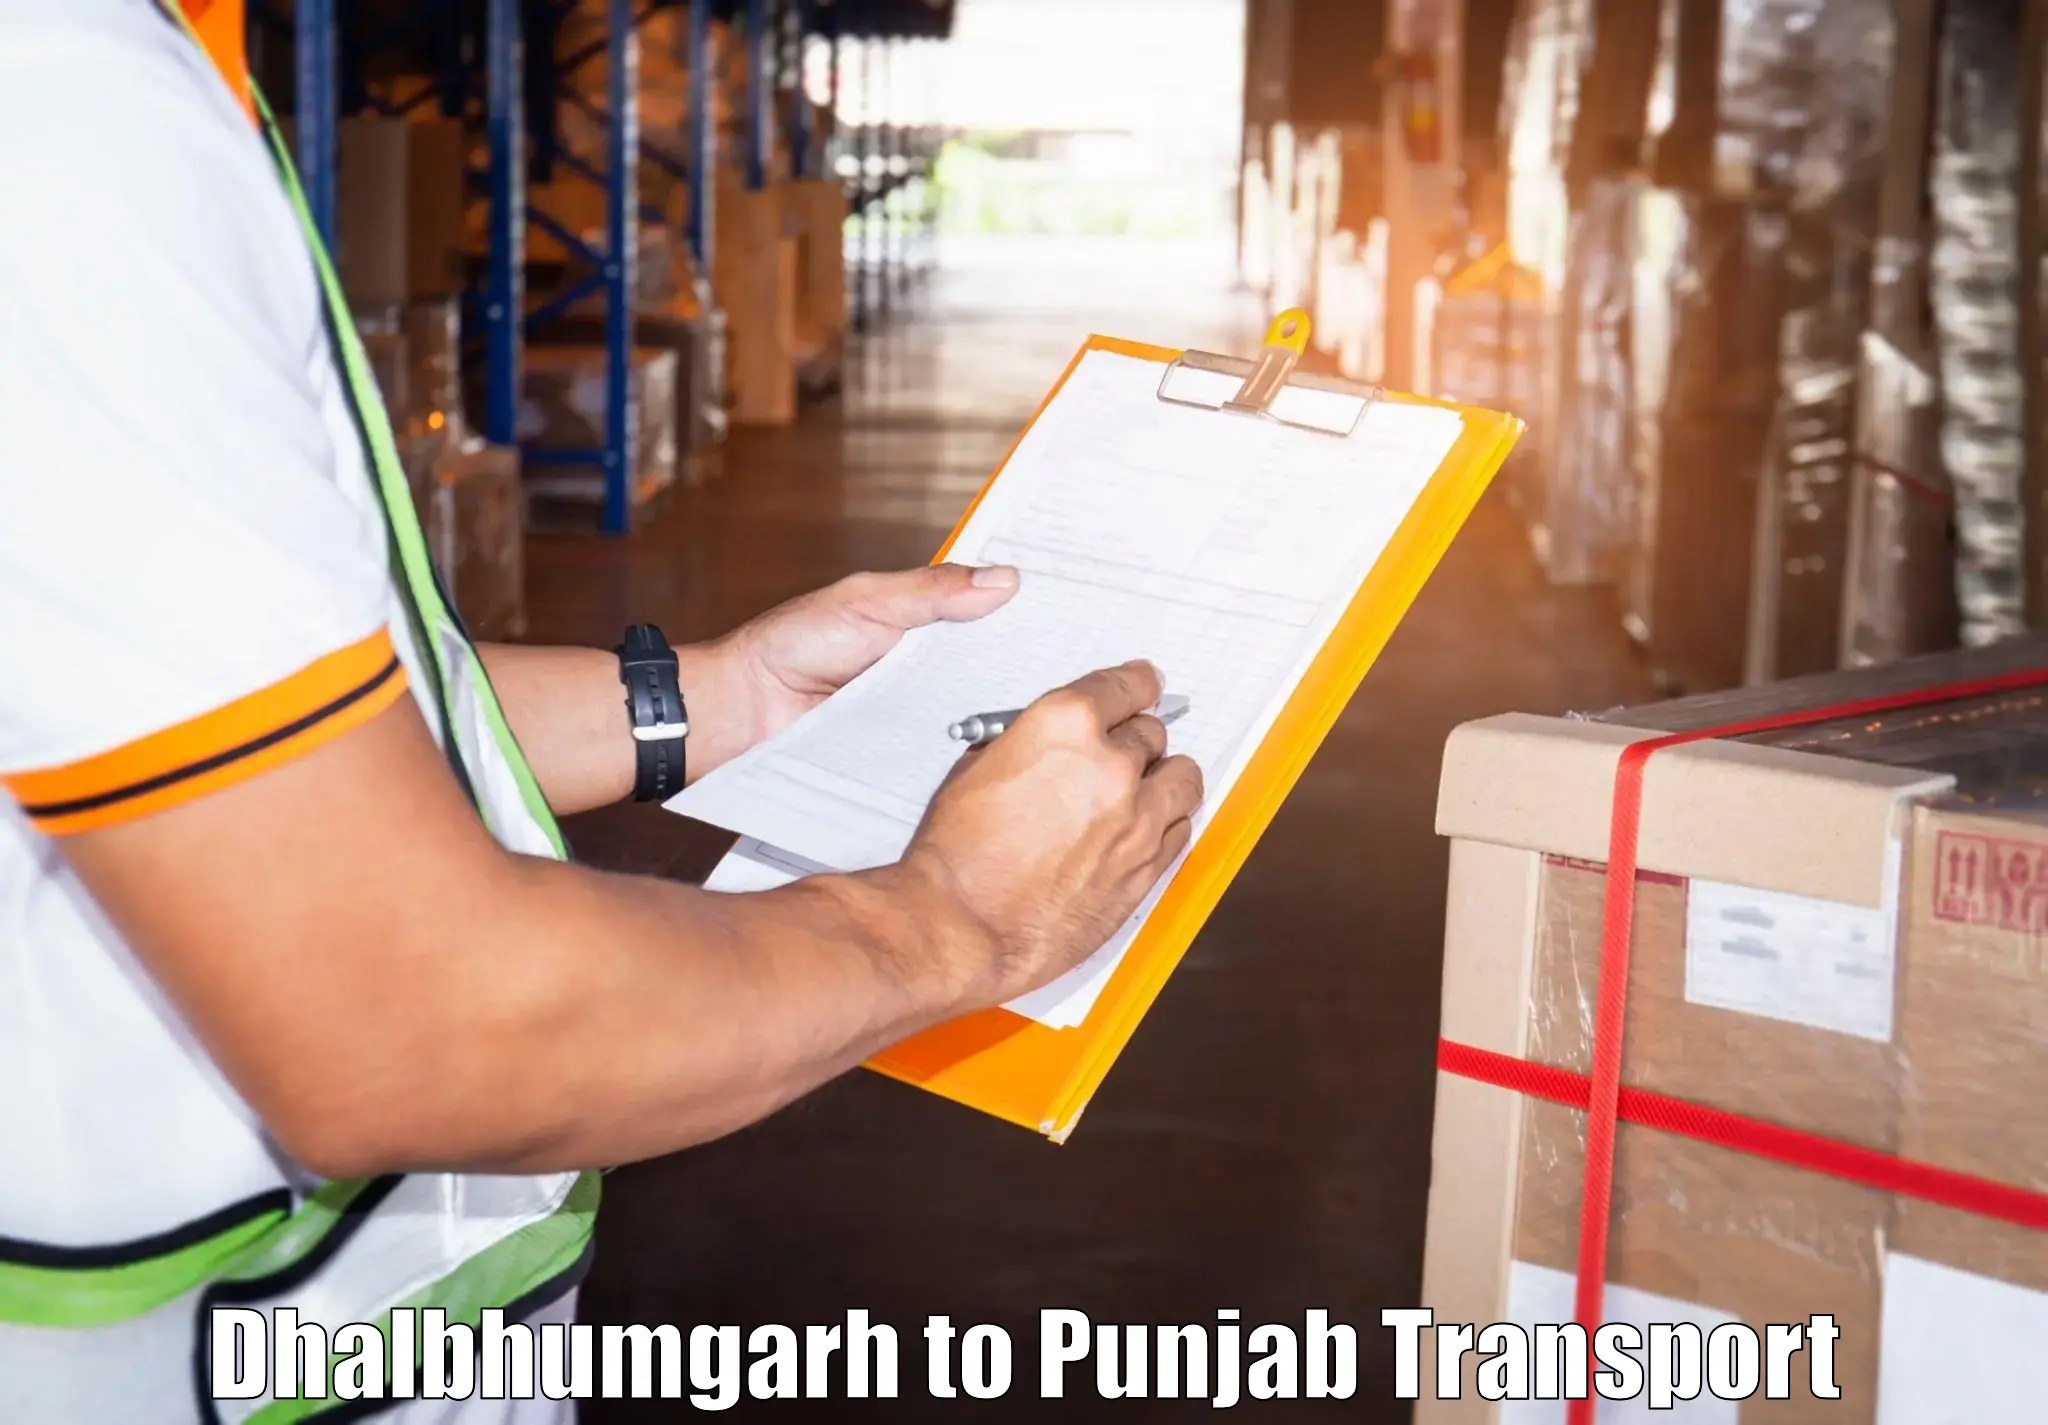 Furniture transport service Dhalbhumgarh to Kotkapura